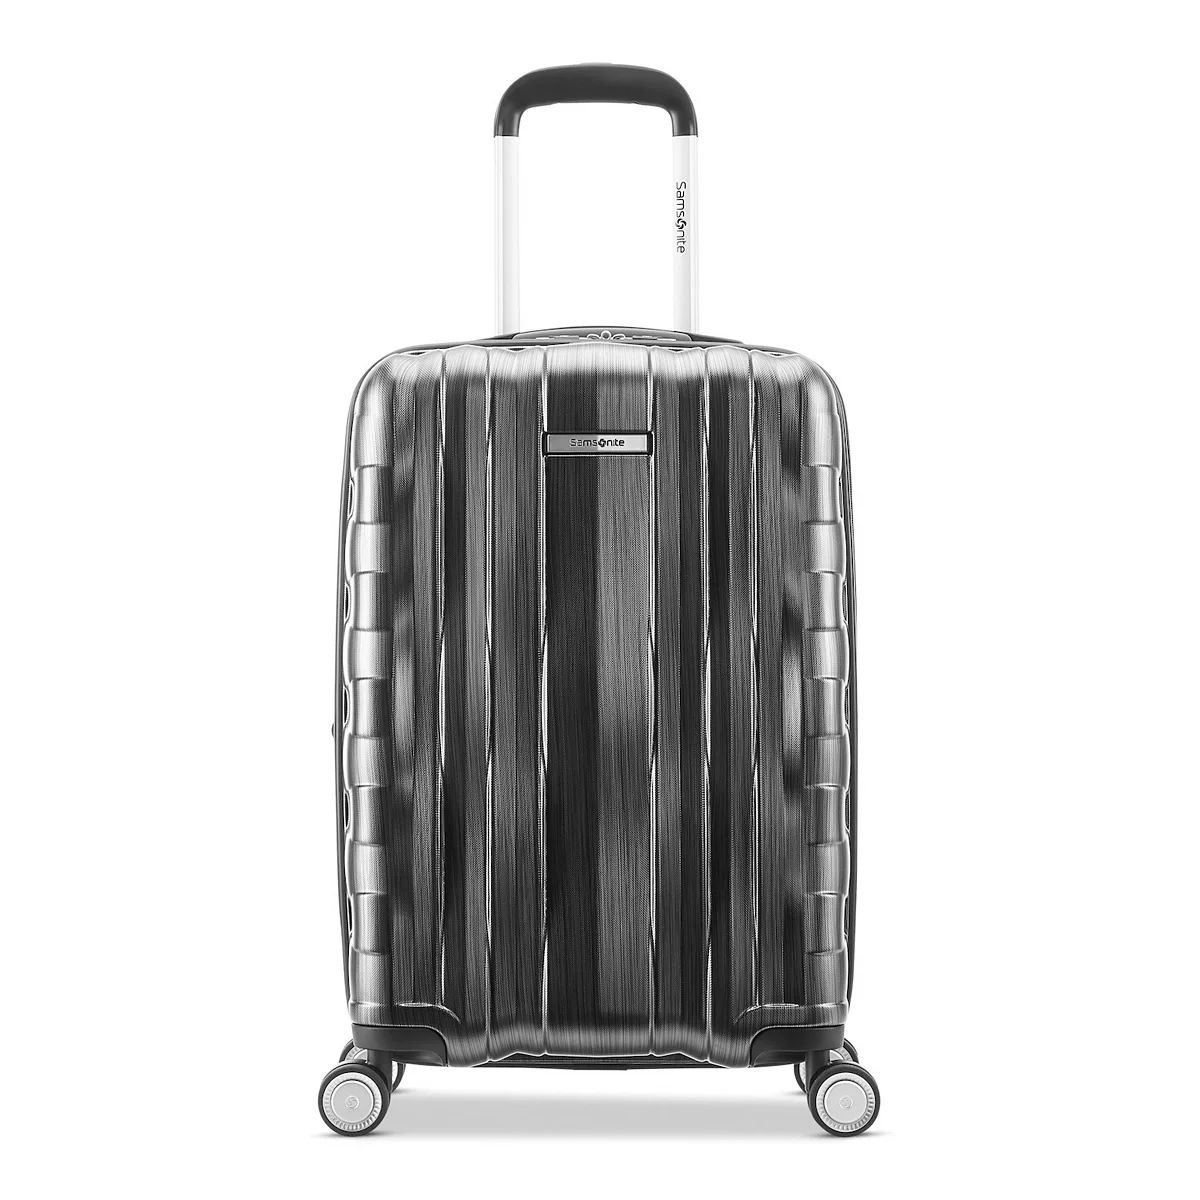 Samsonite Ziplite 5 Hardside Spinner Luggage | Kohl's